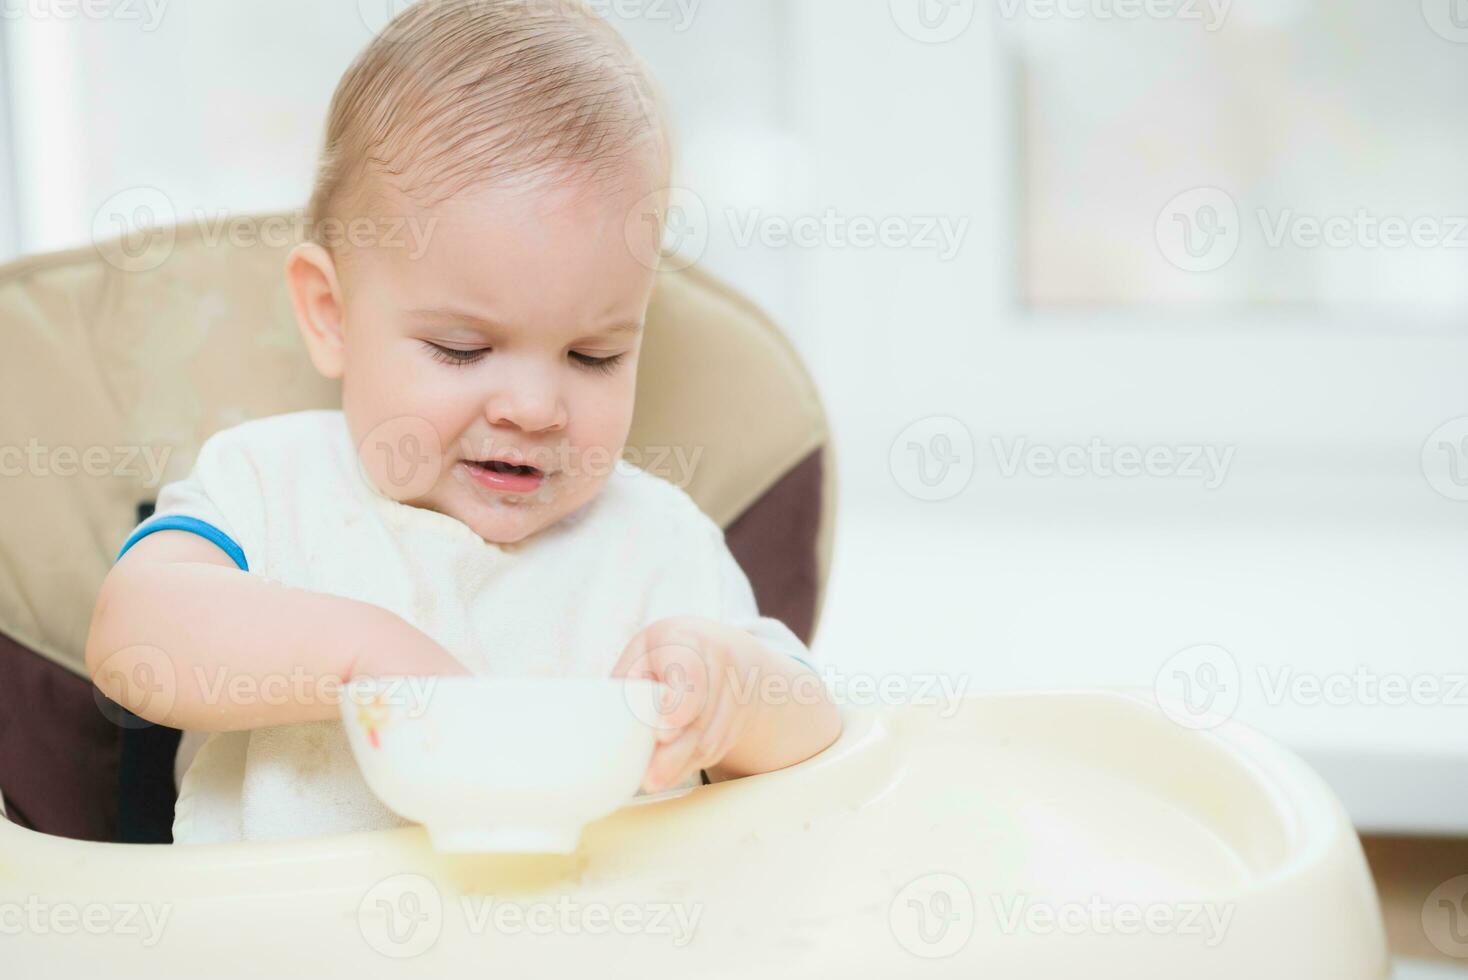 Kid eats porridge hands of the plate photo